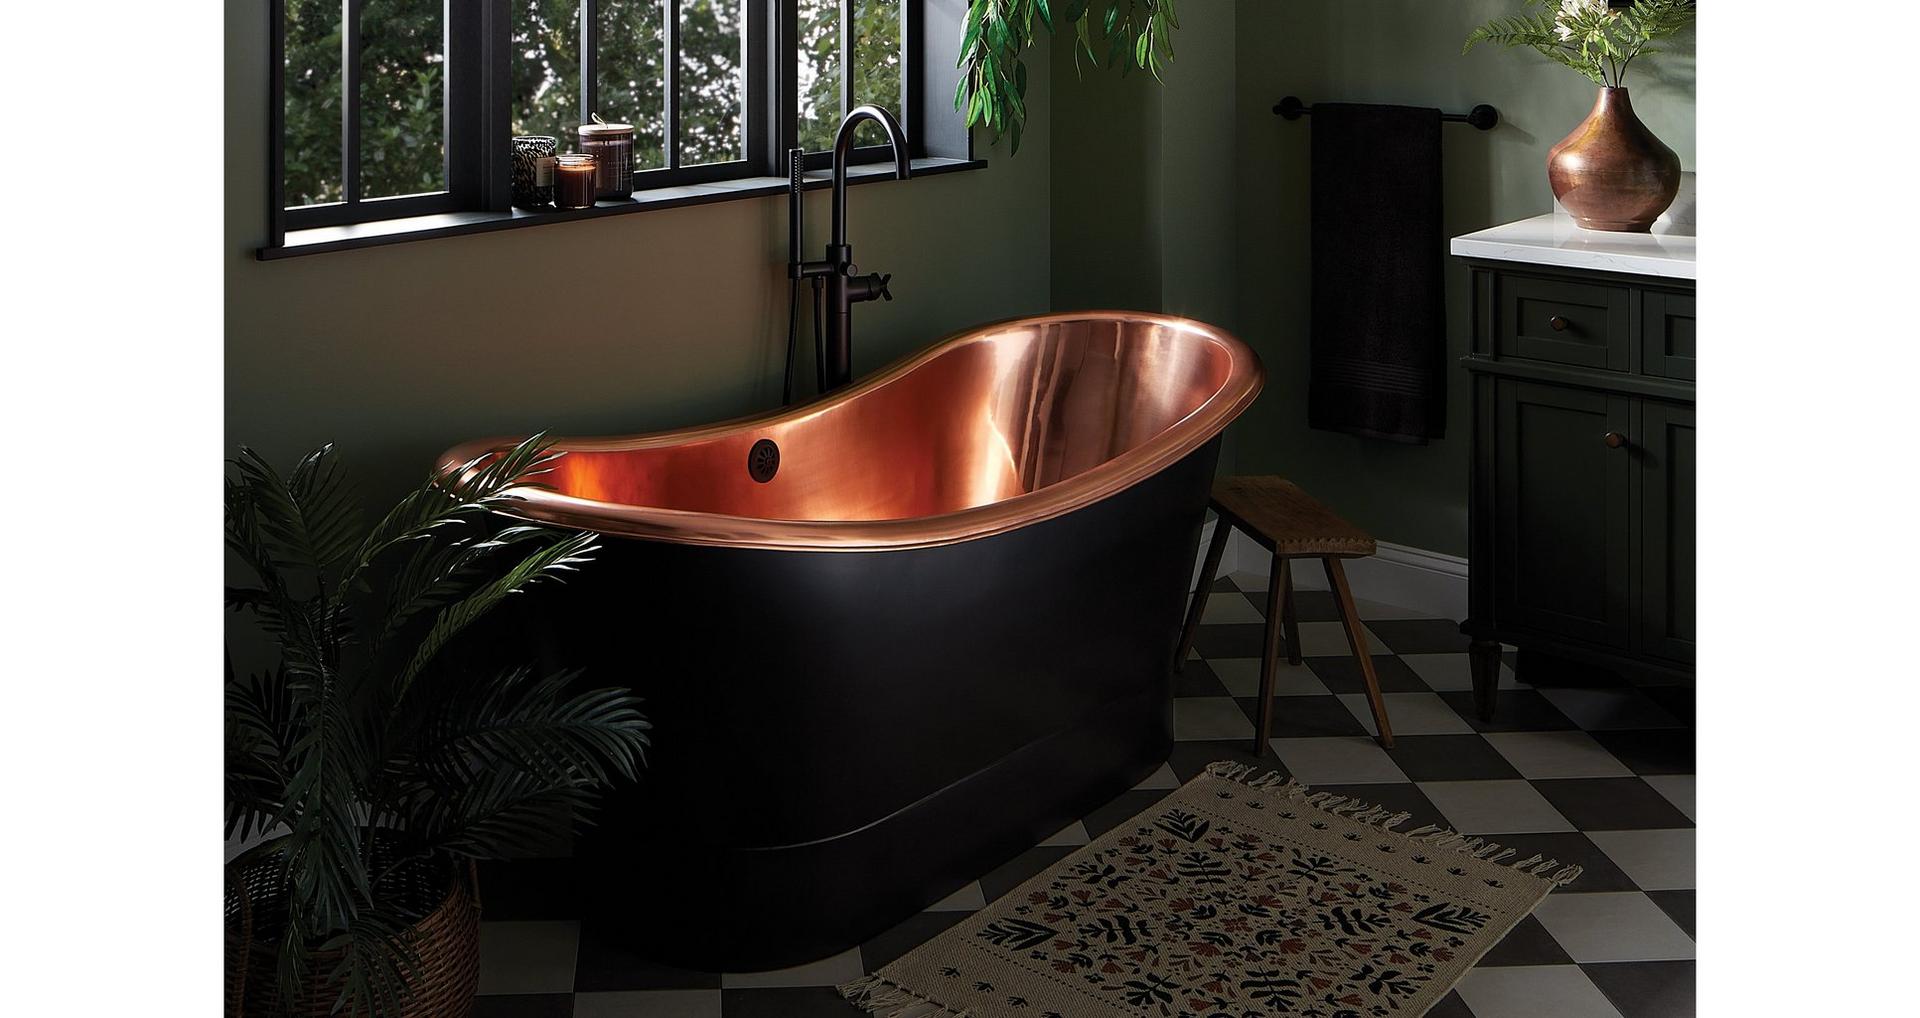 70" Thaine Antique Black Copper Double Slipper Tub, Vassor Freestanding Tub Faucet in Matte Black